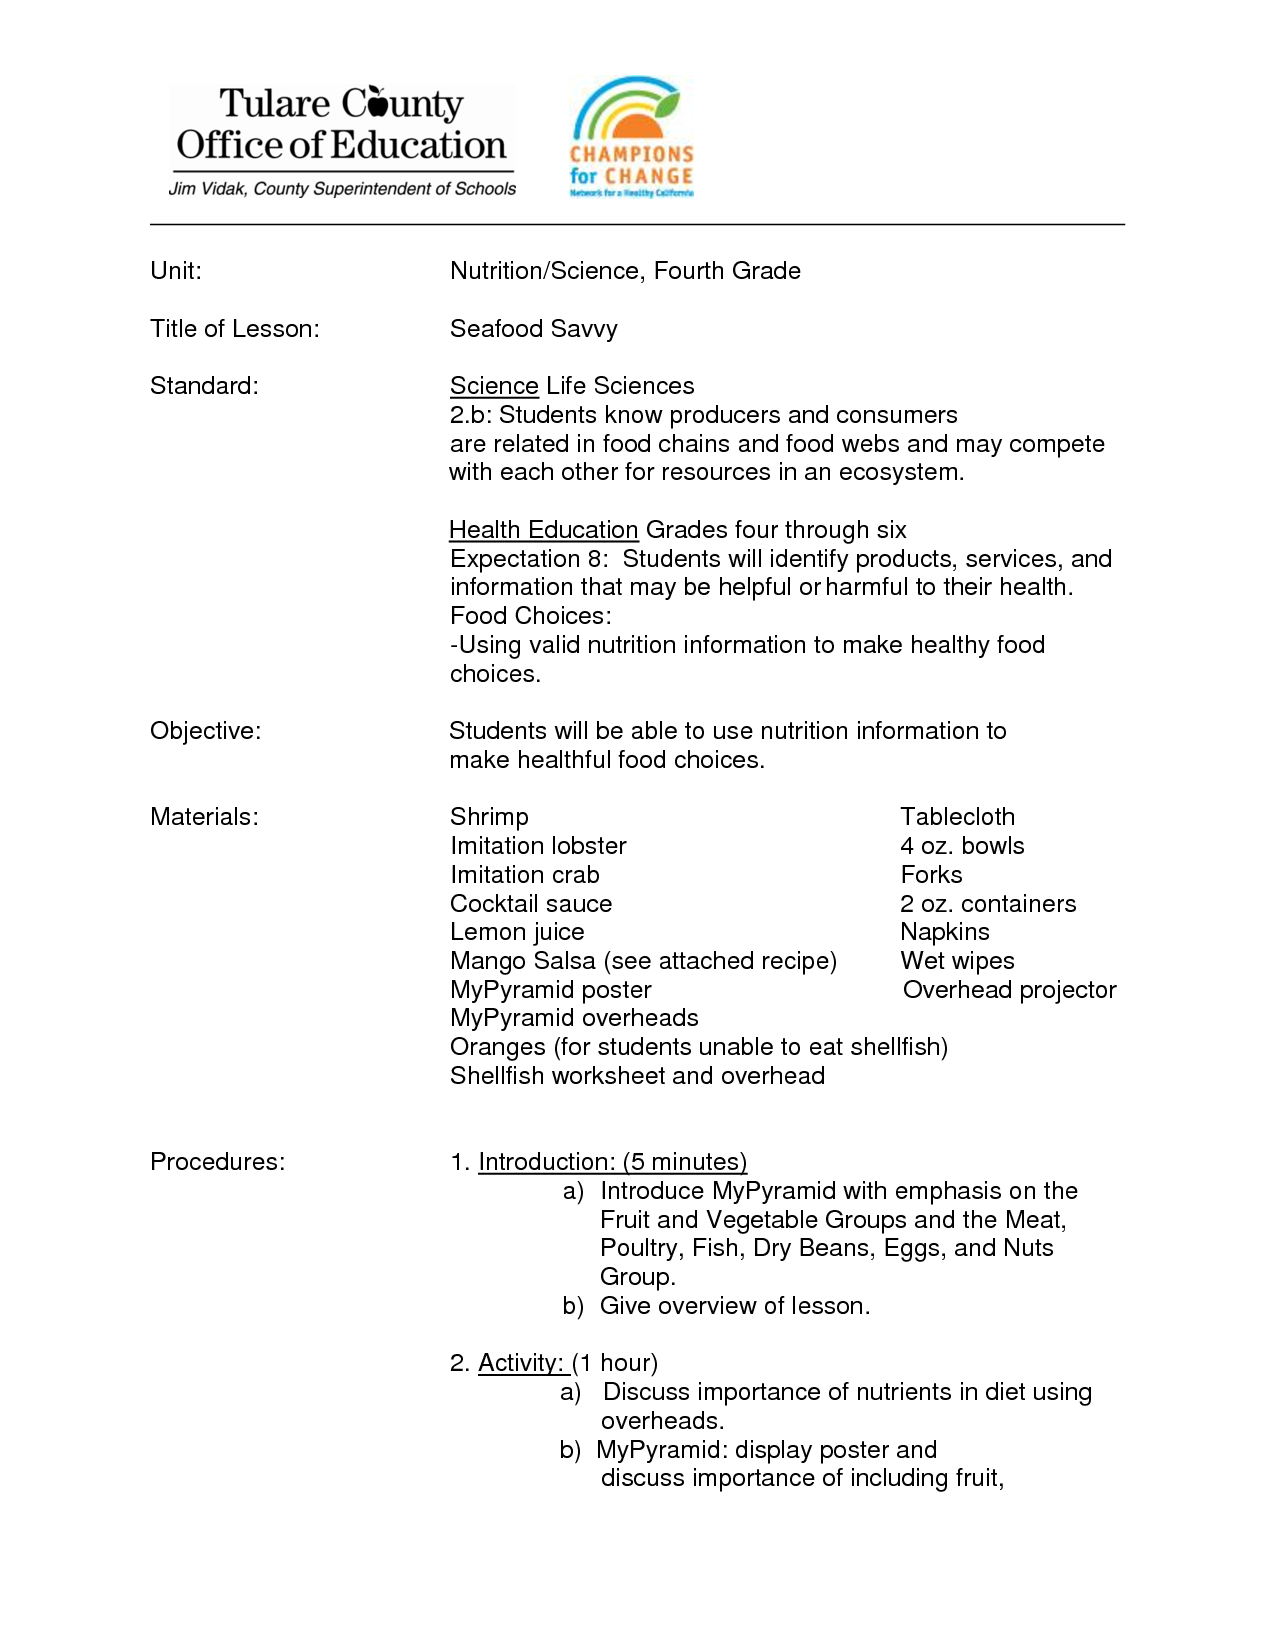 Nutrition Worksheets for 4th Grade Image